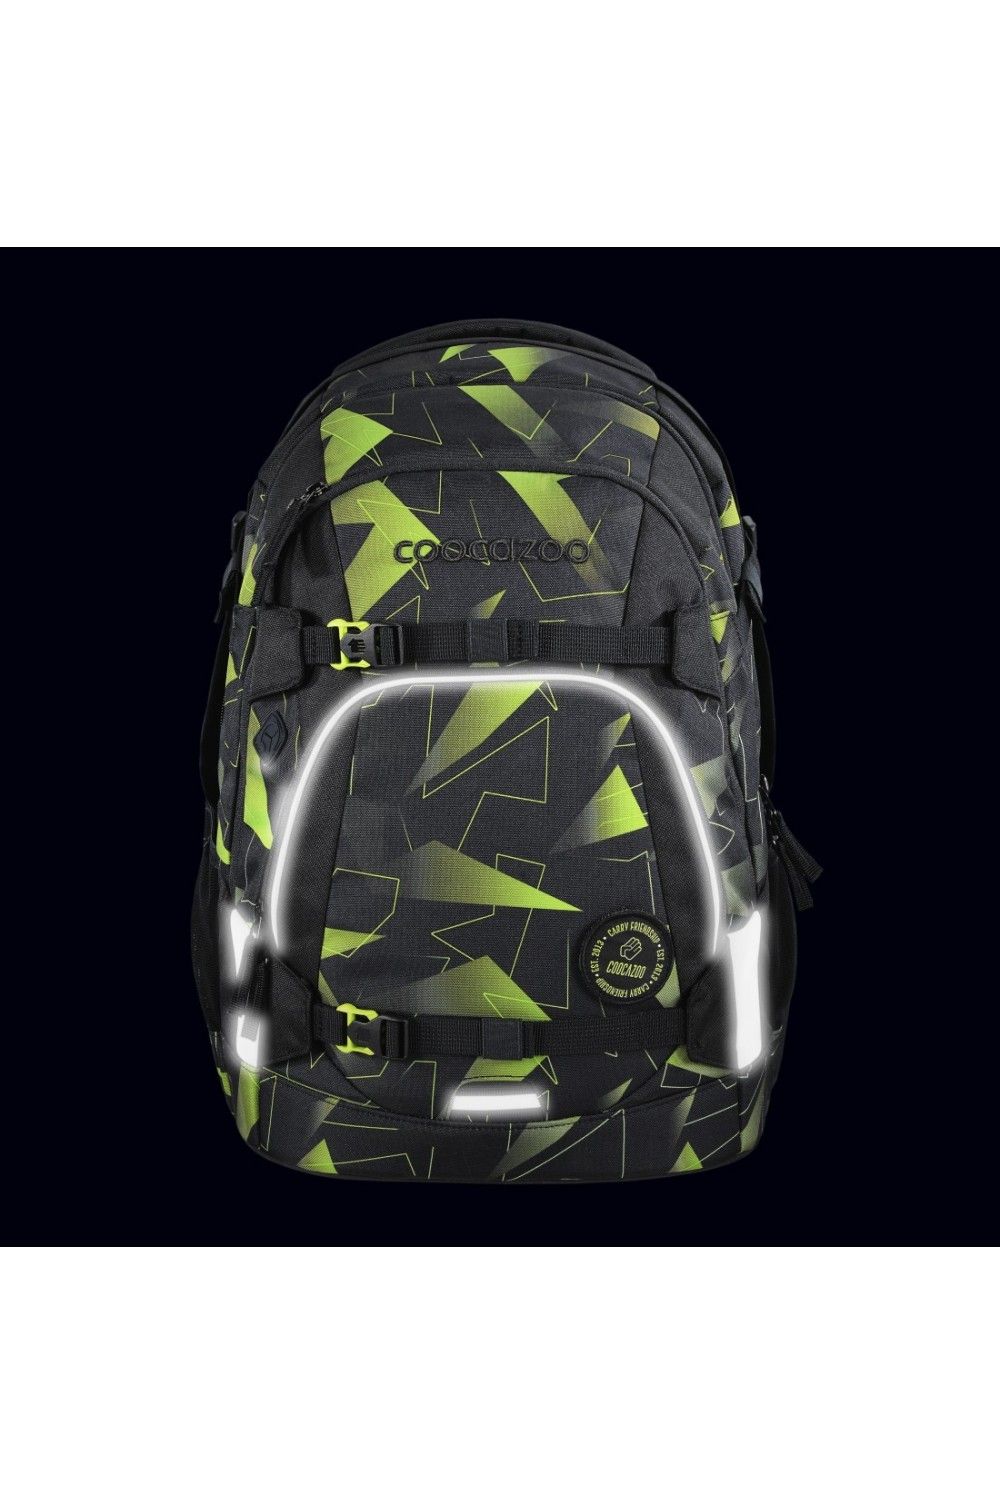 School backpack Coocazoo MATE Lime Flash